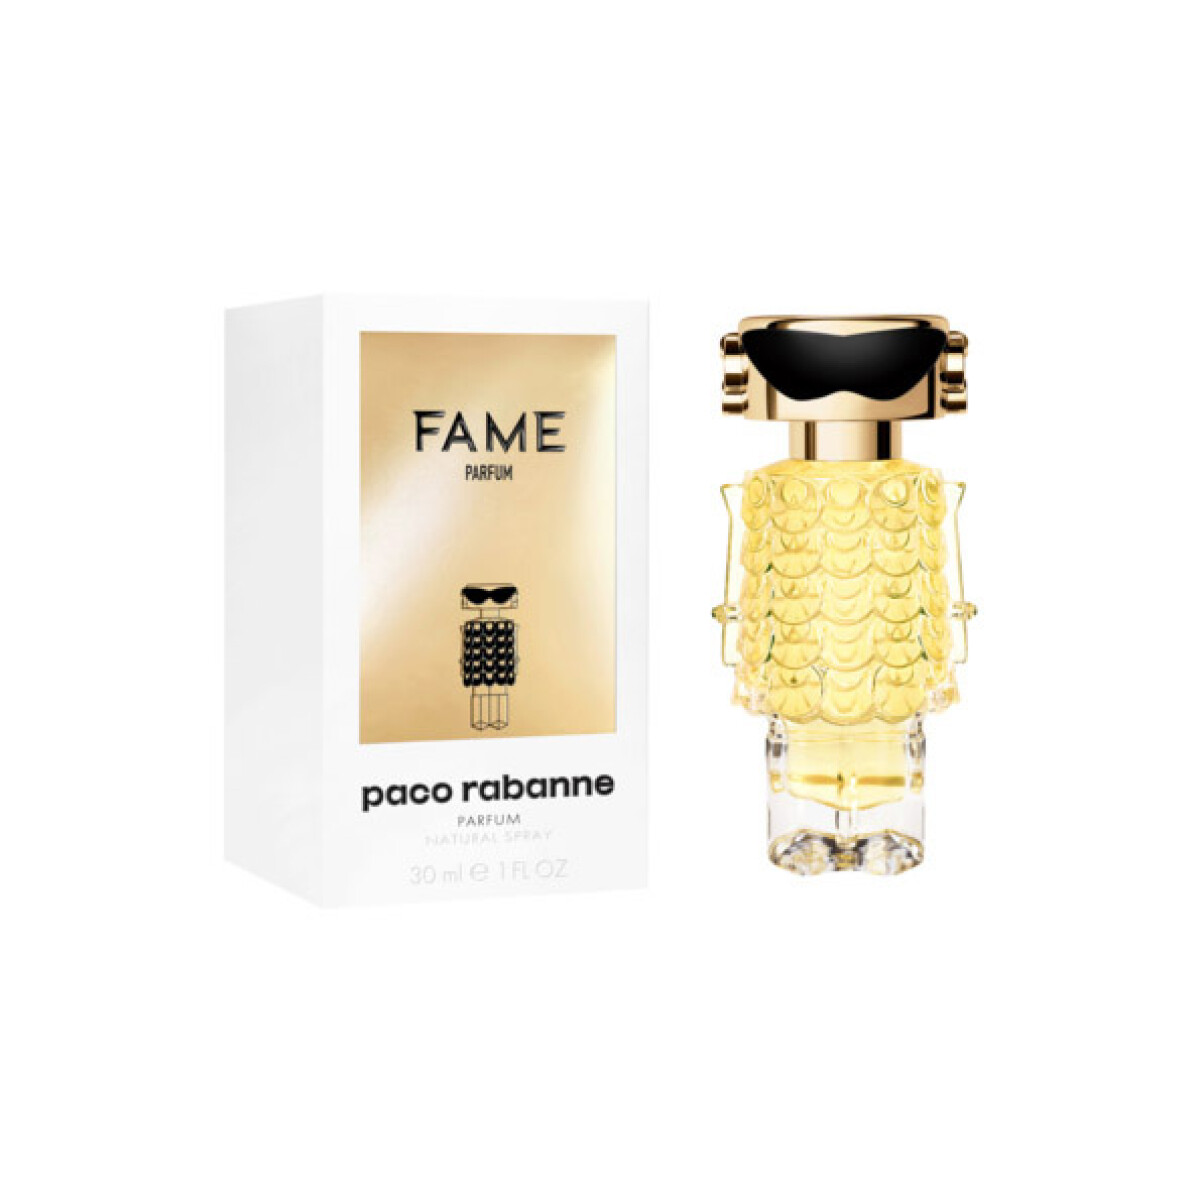 P.R Fame Parfum 30ml 